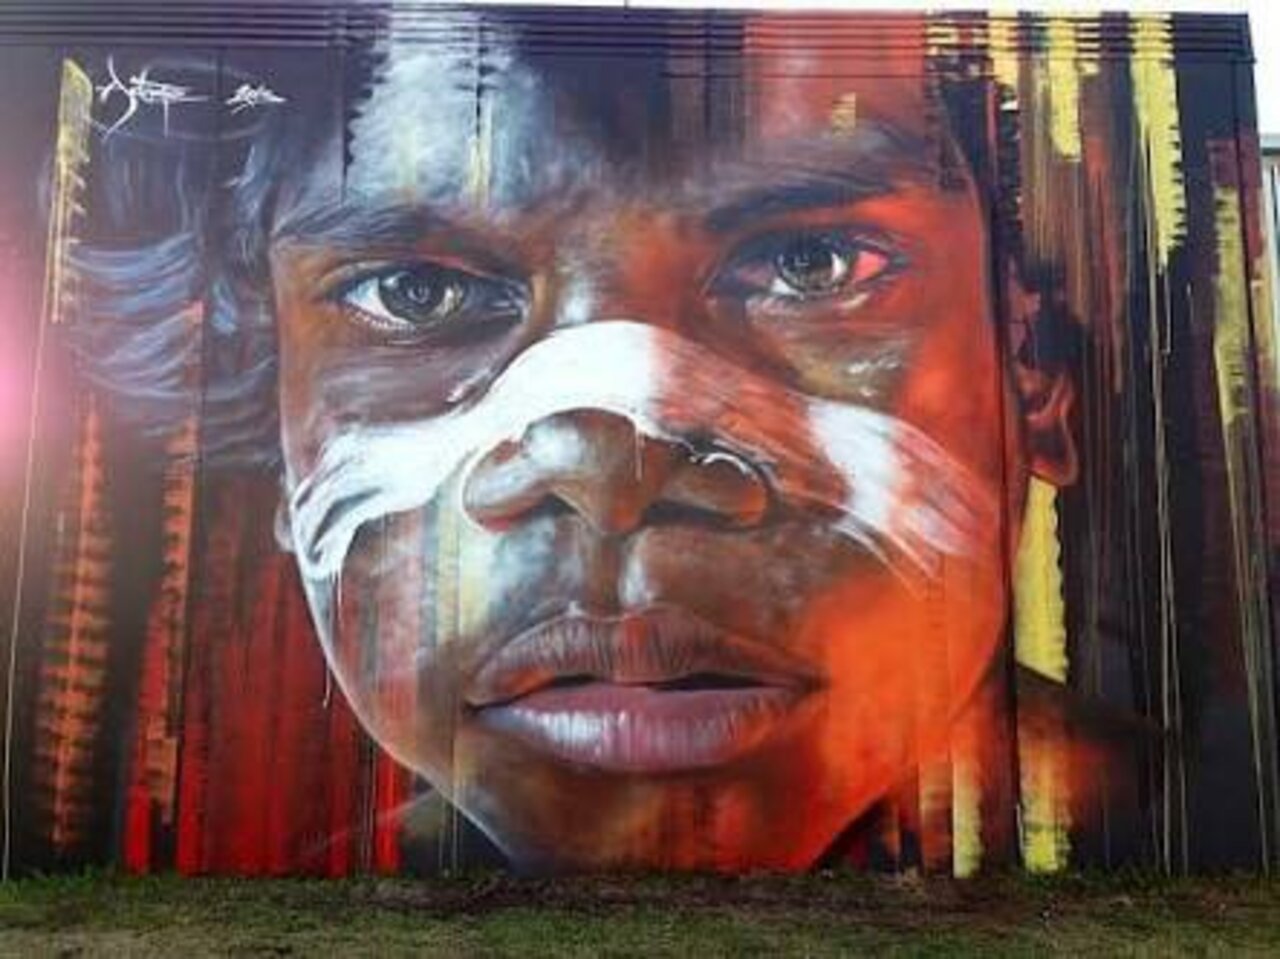 Mural by Adnate #Newcastle  #Australia #mural #Streetart #urbanart #graffiti #art https://t.co/8A5QVafXTN